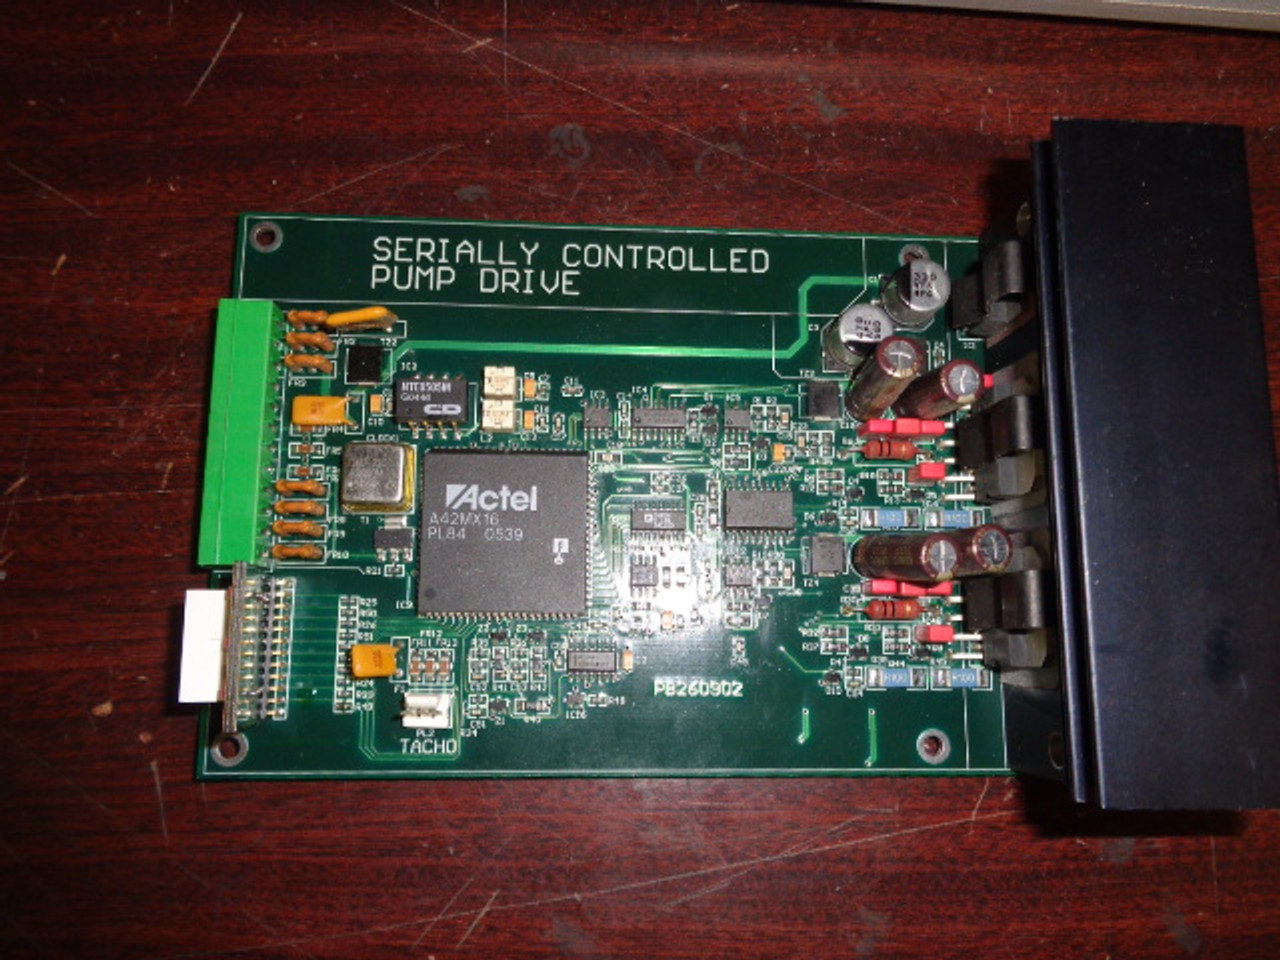 Tacho PB260902 Serially Controlled Pump Drive PCB